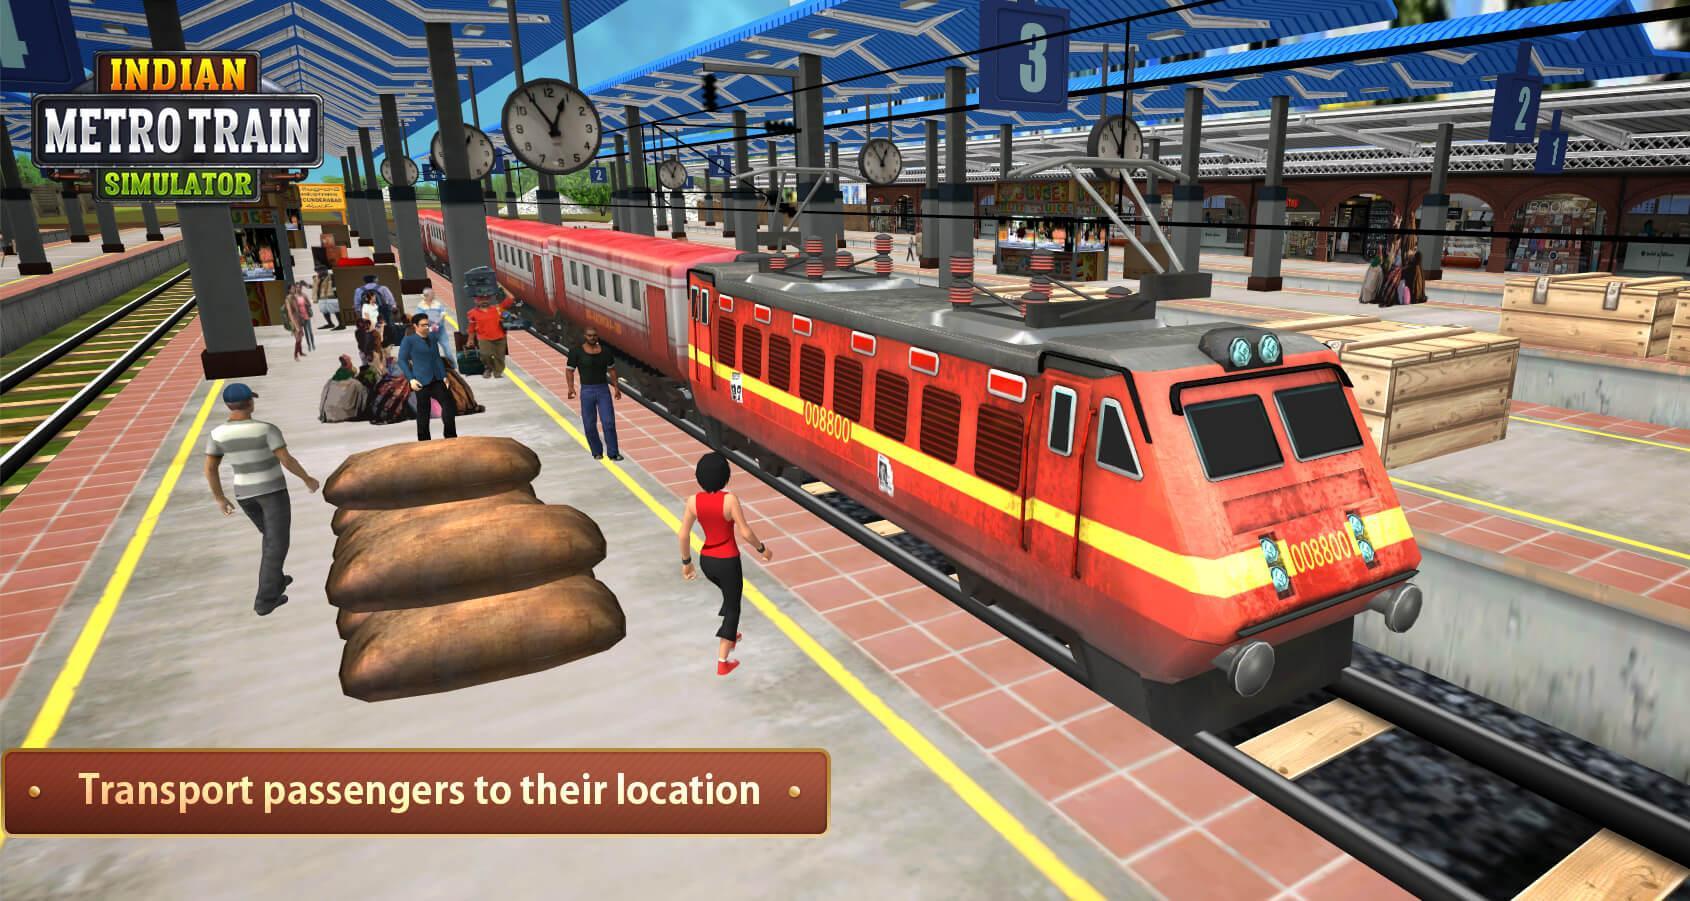 Screenshot 1 of Simulador de tren de metro indio 2020 5.0